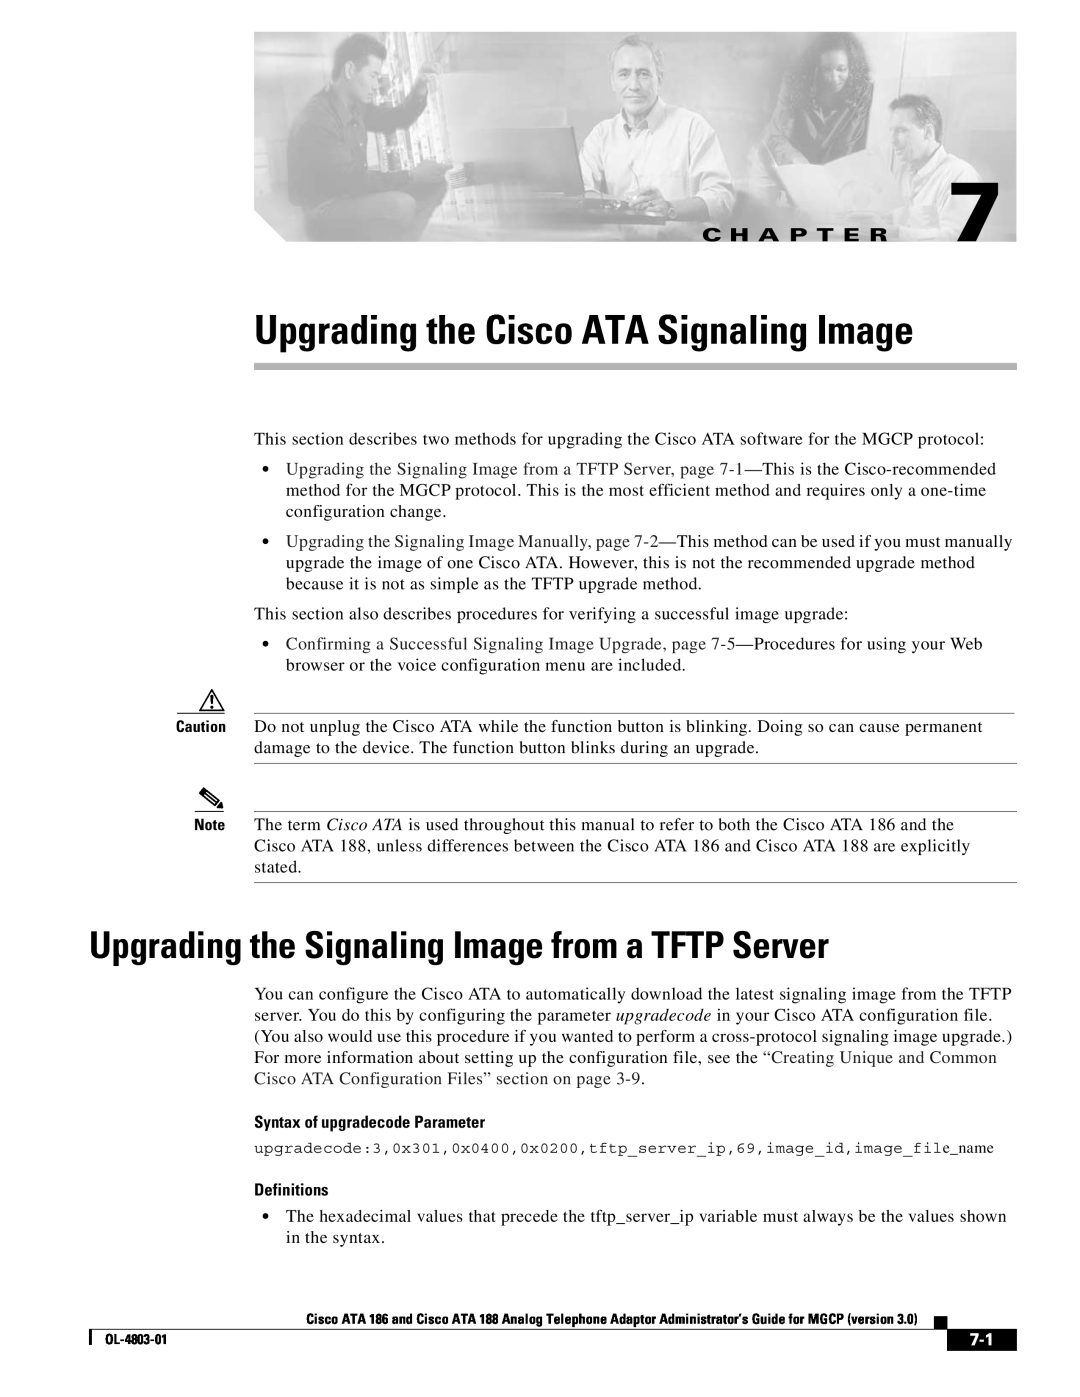 Cisco Systems ATA 186 manual Upgrading the Cisco ATA Signaling Image, Upgrading the Signaling Image from a TFTP Server 